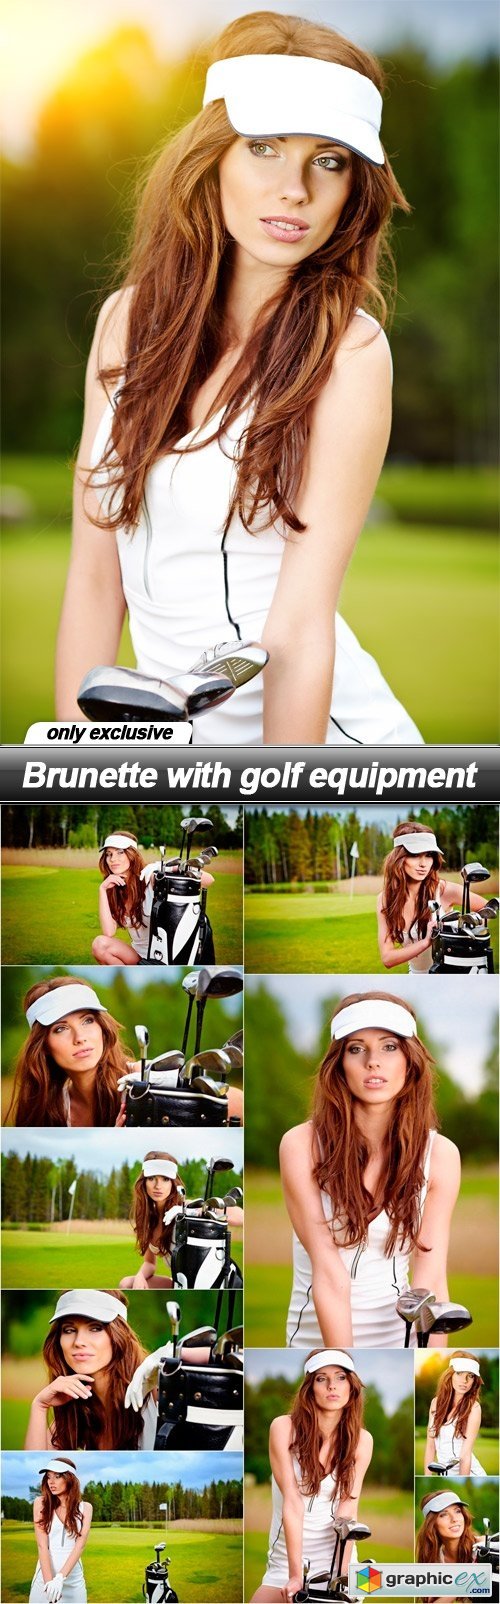 Brunette with golf equipment - 10 UHQ JPEG